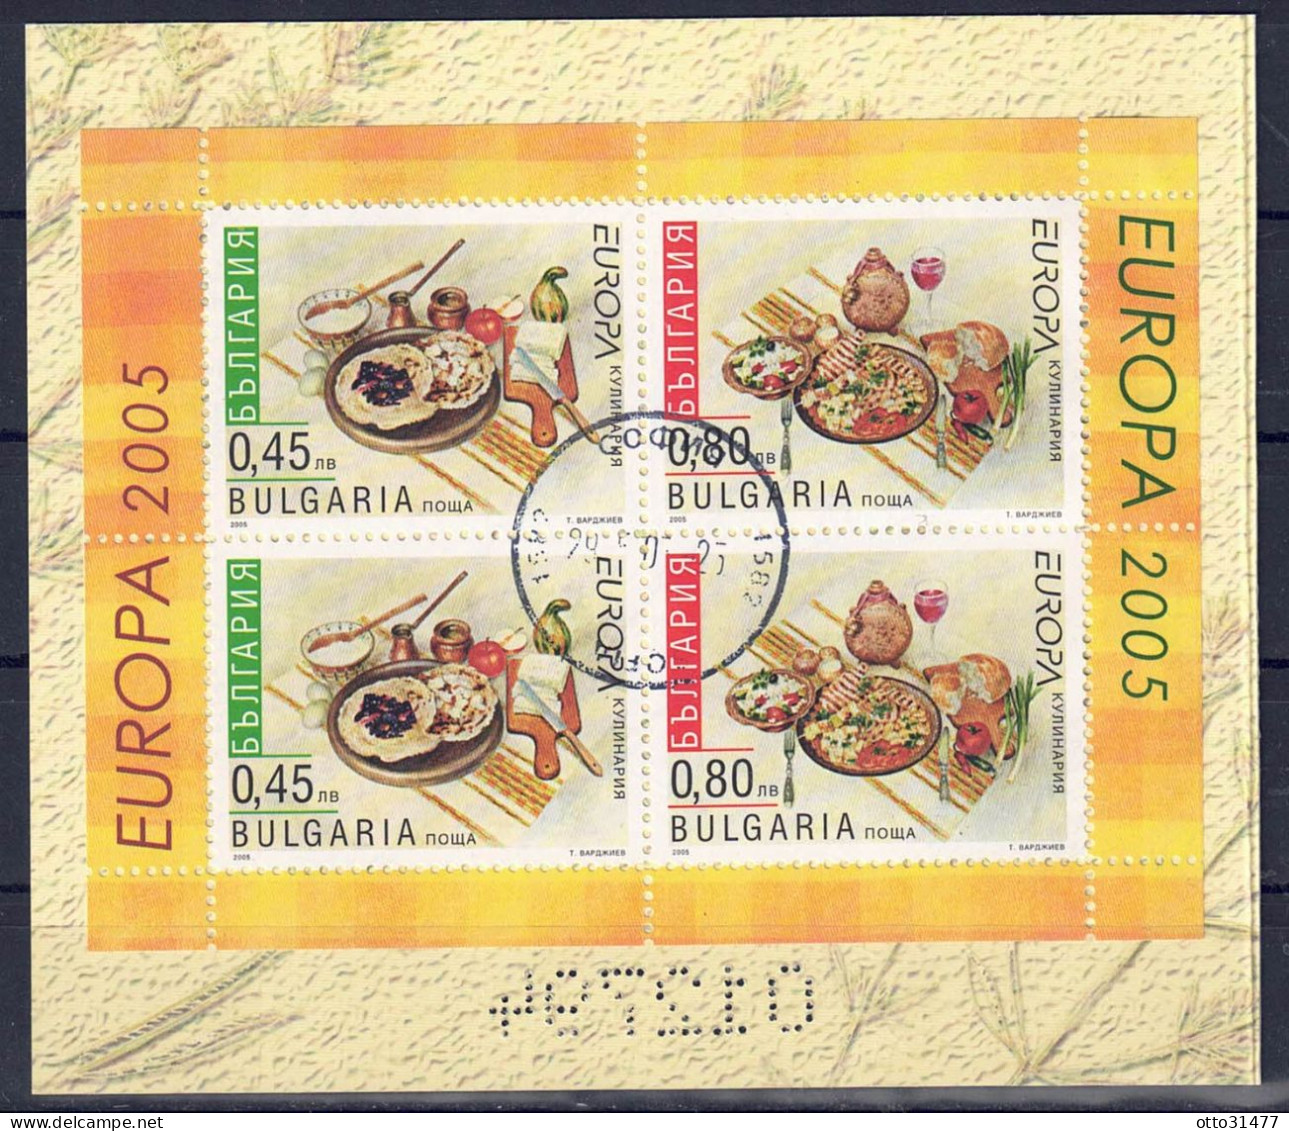 Bulgarien 2005 - EUROPA - Hefchenblatt Aus MH 3, Nr. 4704 C + 4705 C Zd., Gestempelt / Used - Used Stamps